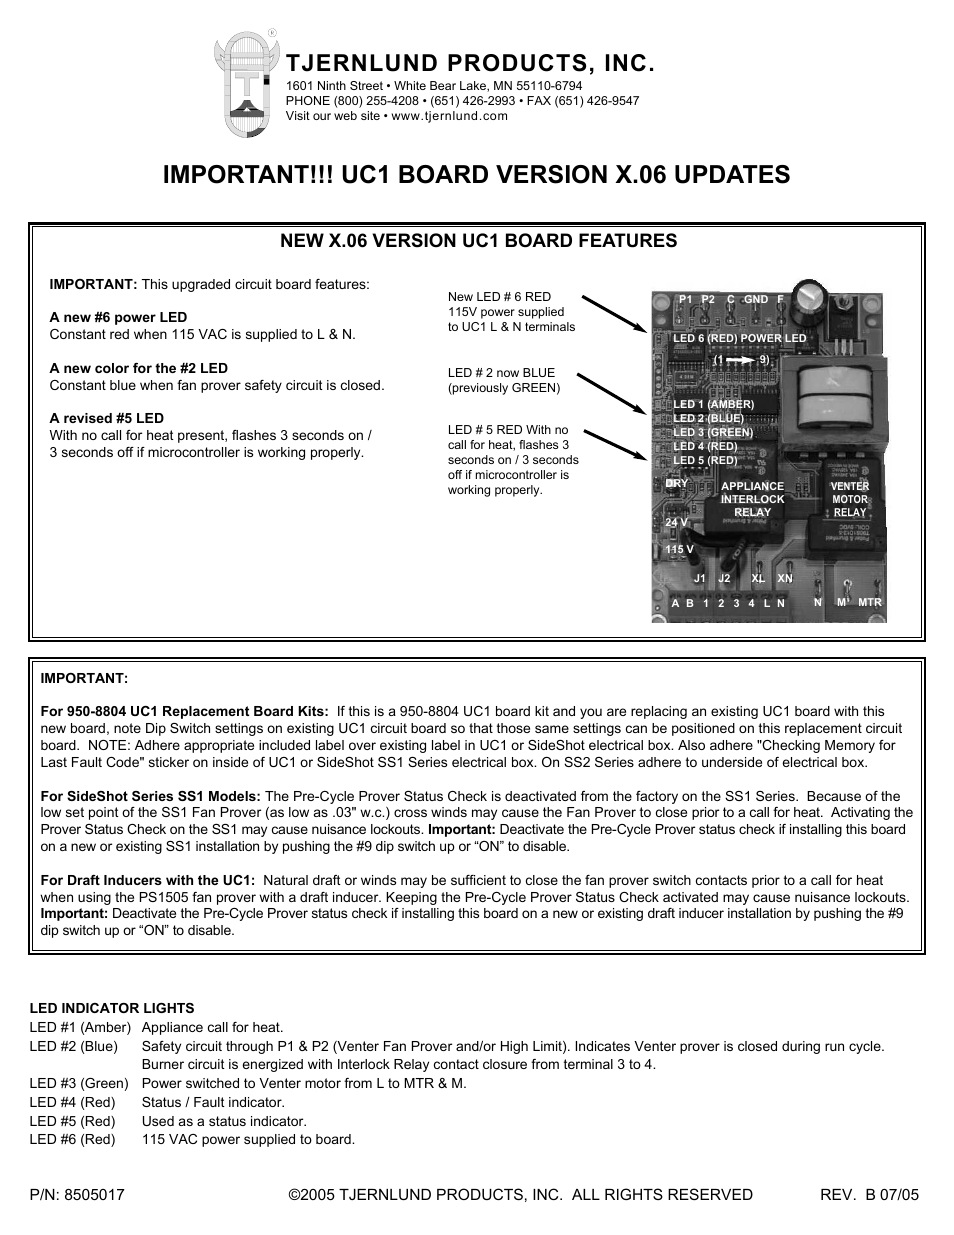 UC1 Universal Control (Version X.06) Addendum 8505017 Rev B 07/05